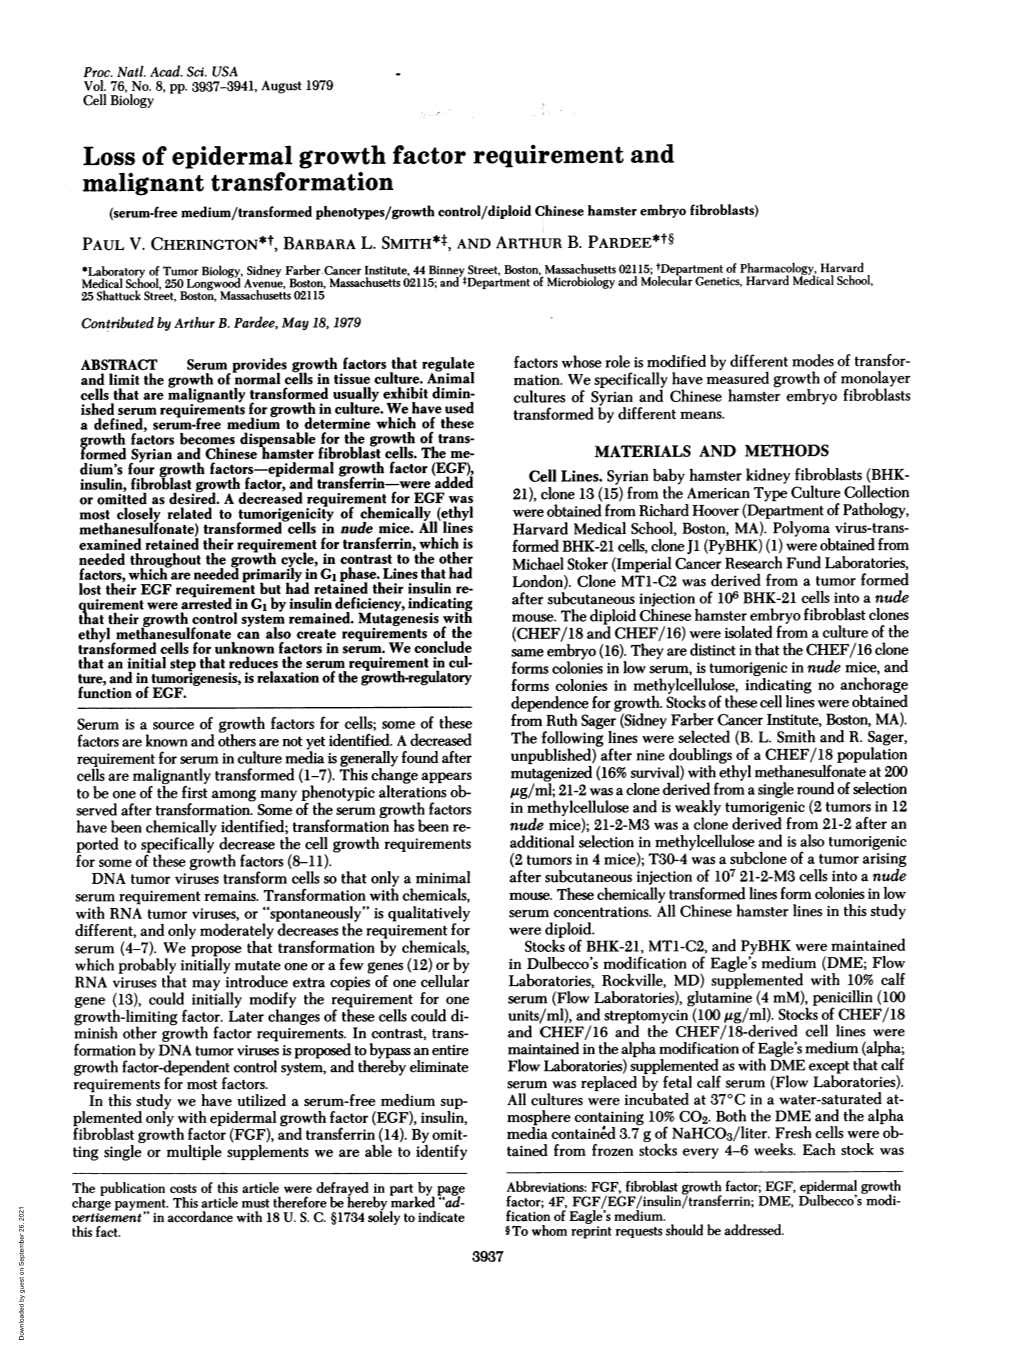 Malignant Transformation (Serum-Free Medium/Transformed Phenotypes/Growth Control/Diploid Chinese Hamster Embryo Fibroblasts) PAUL V